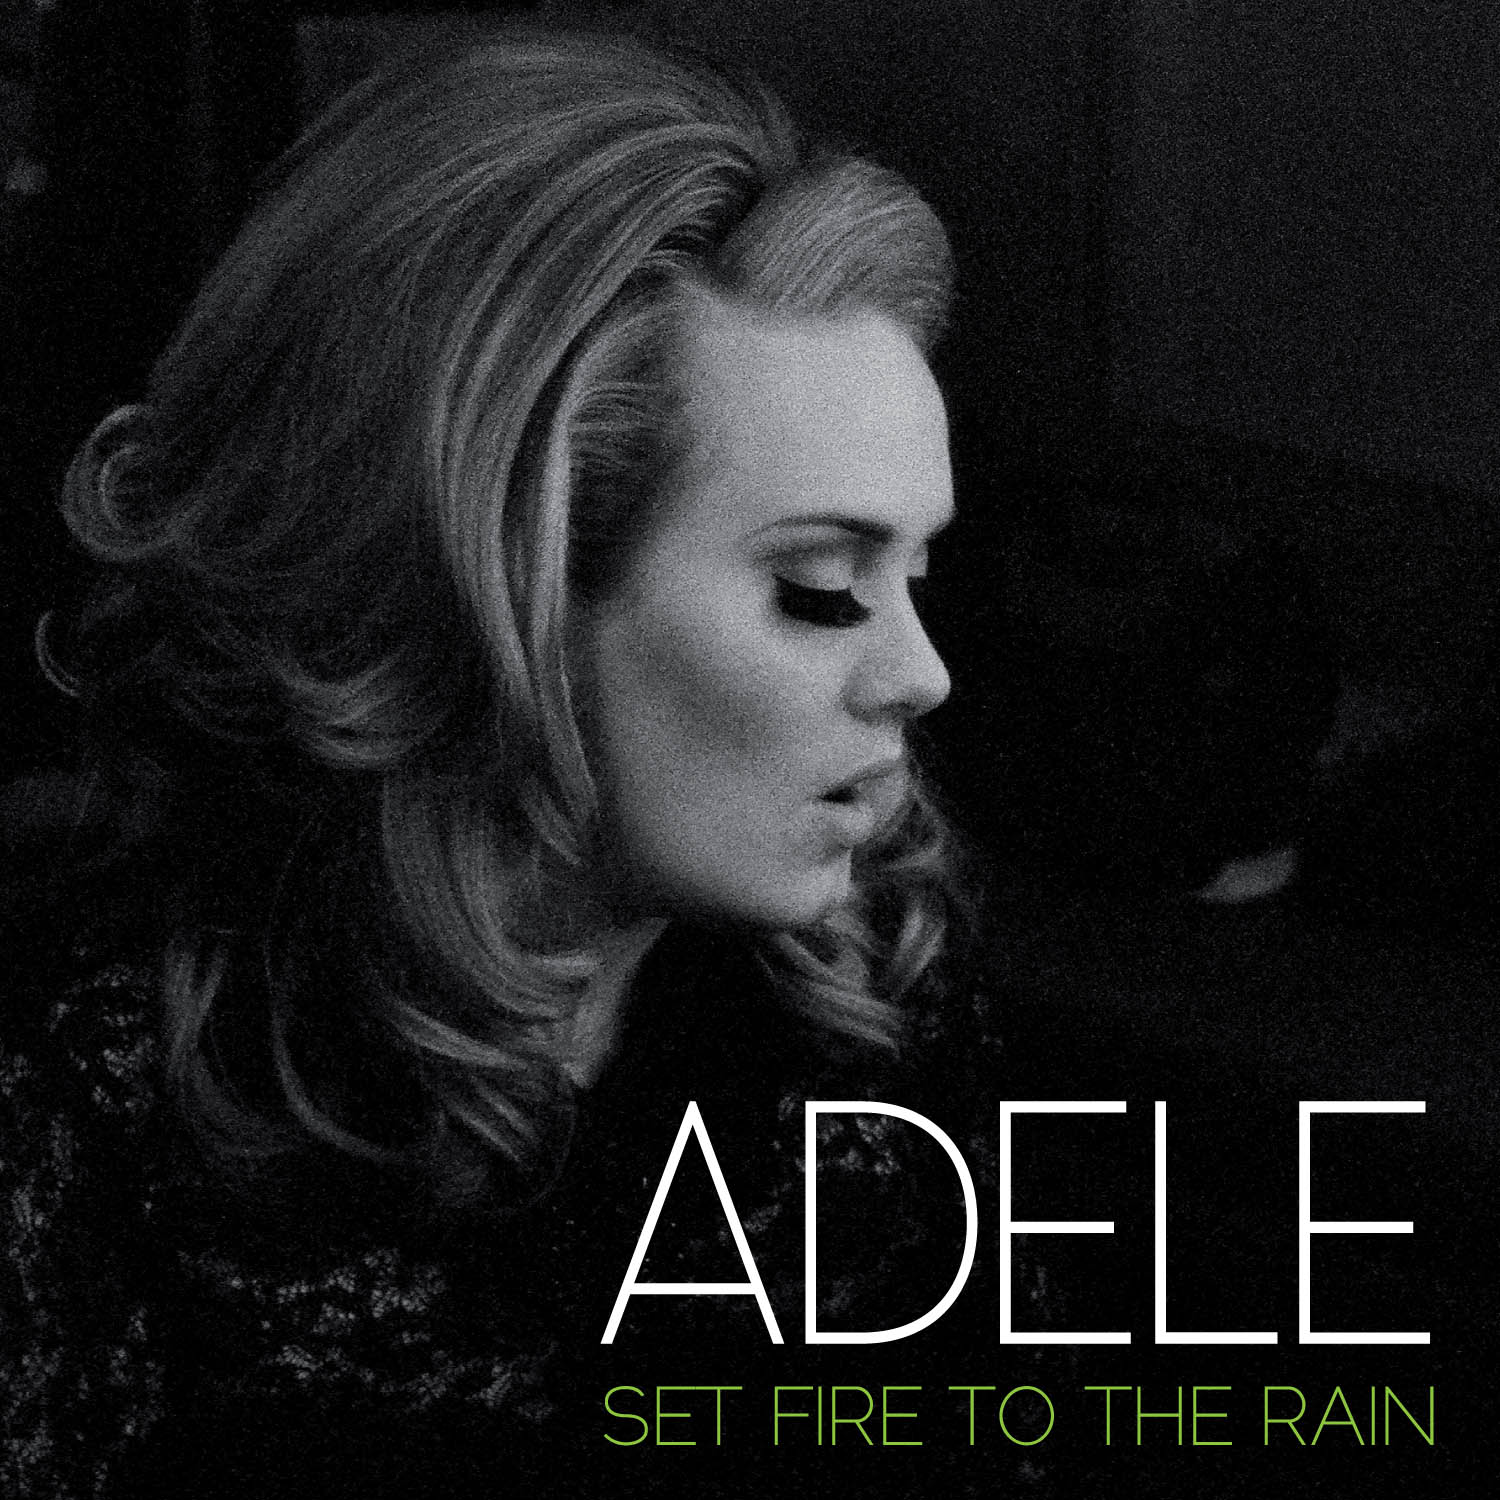 Portada Oficial: Adele - Set Fire To The Rain Adele+-+Set+Fire+to+the+Rain+%25282011%2529